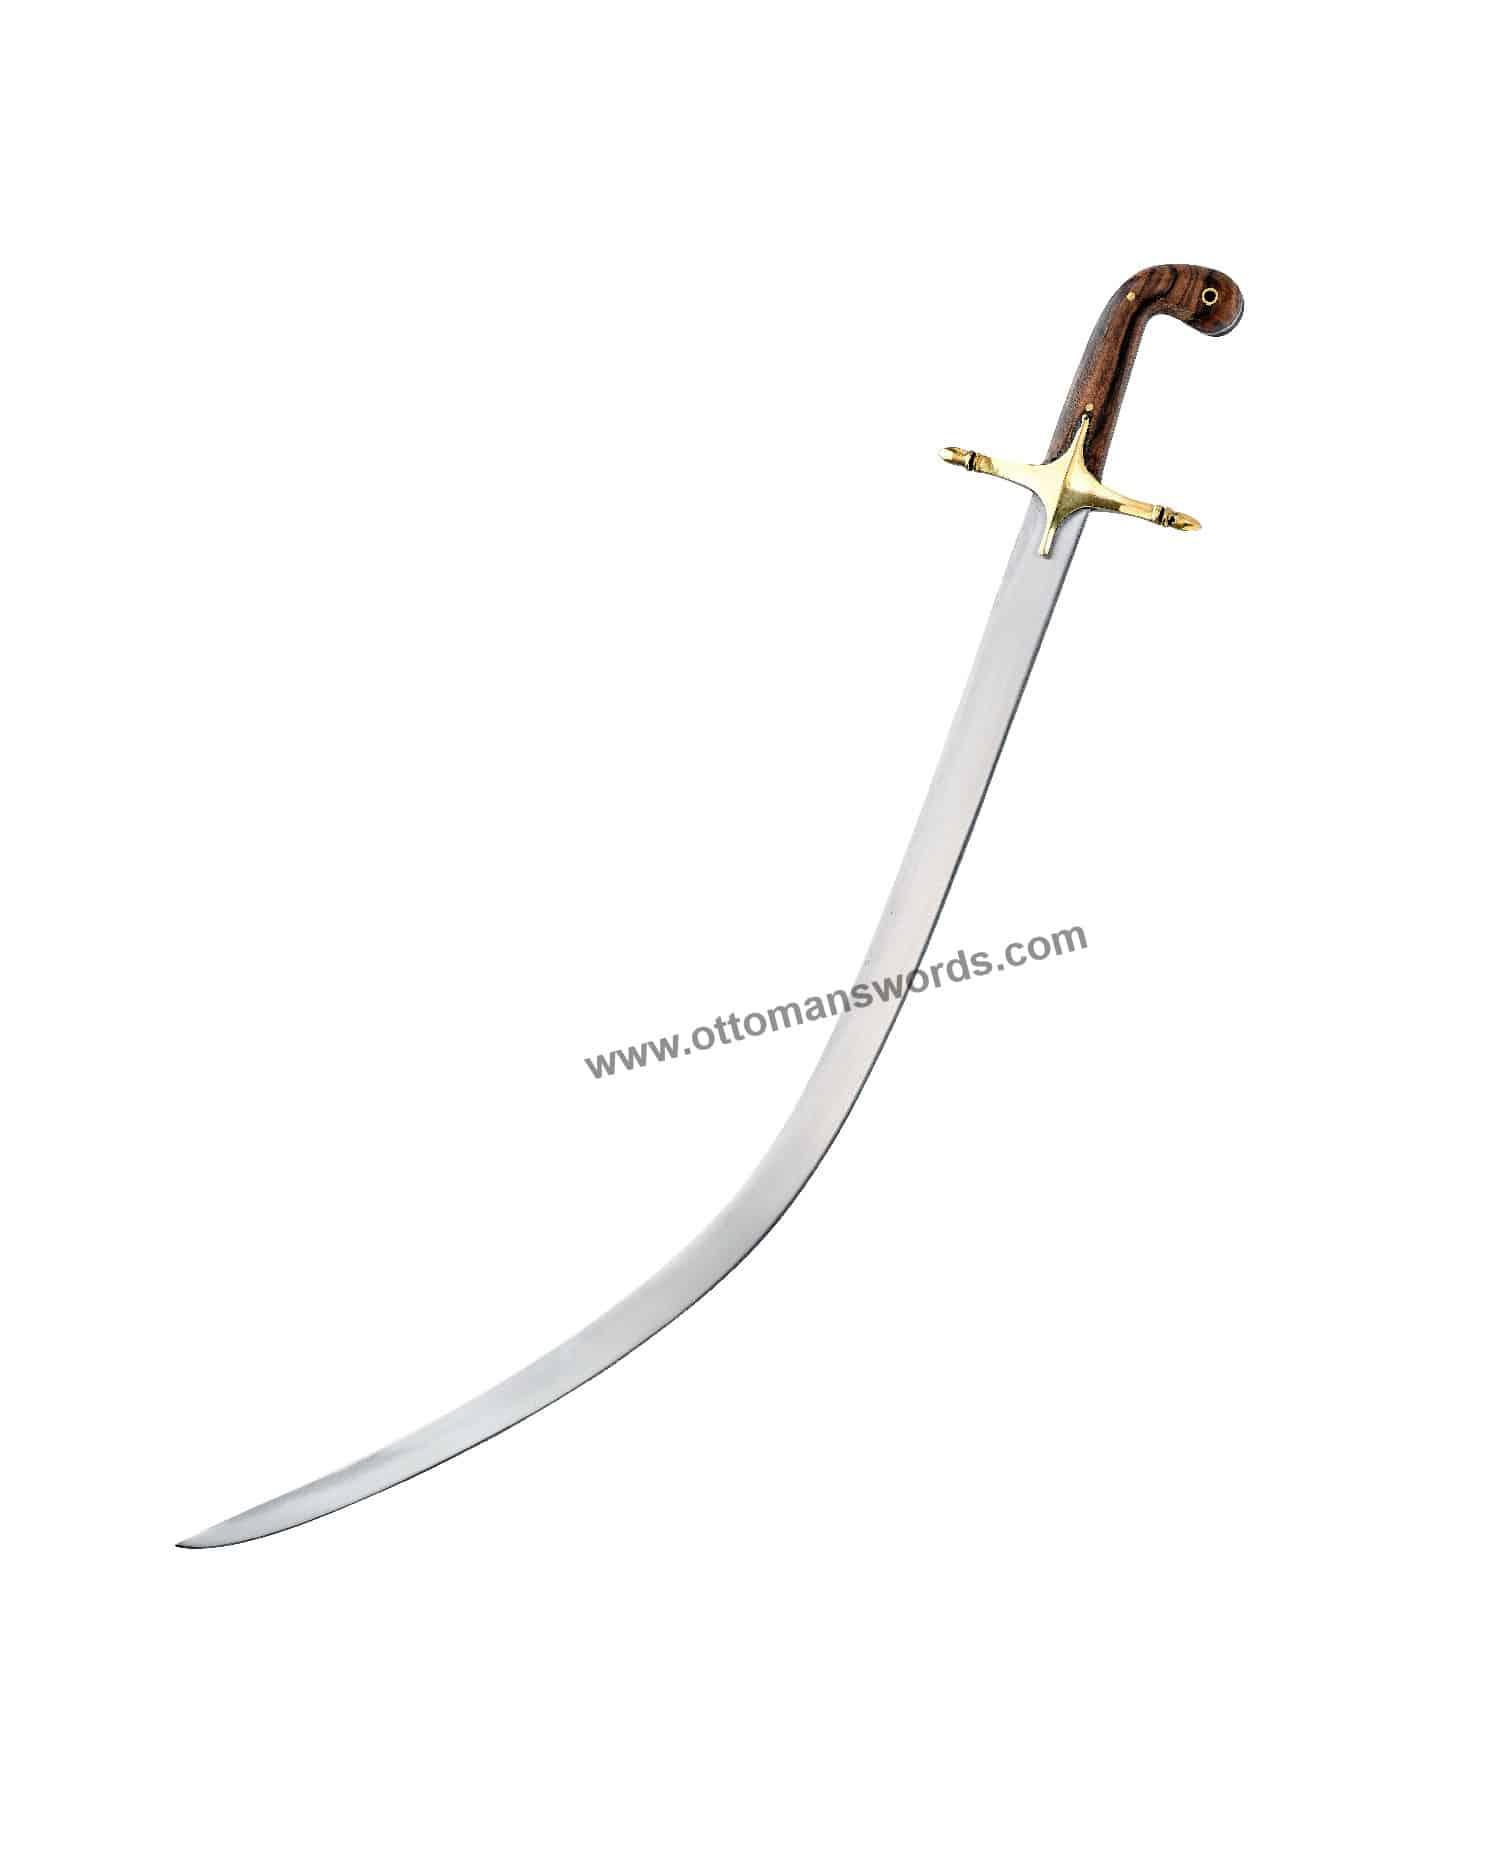 shamshir sword for sale (1)